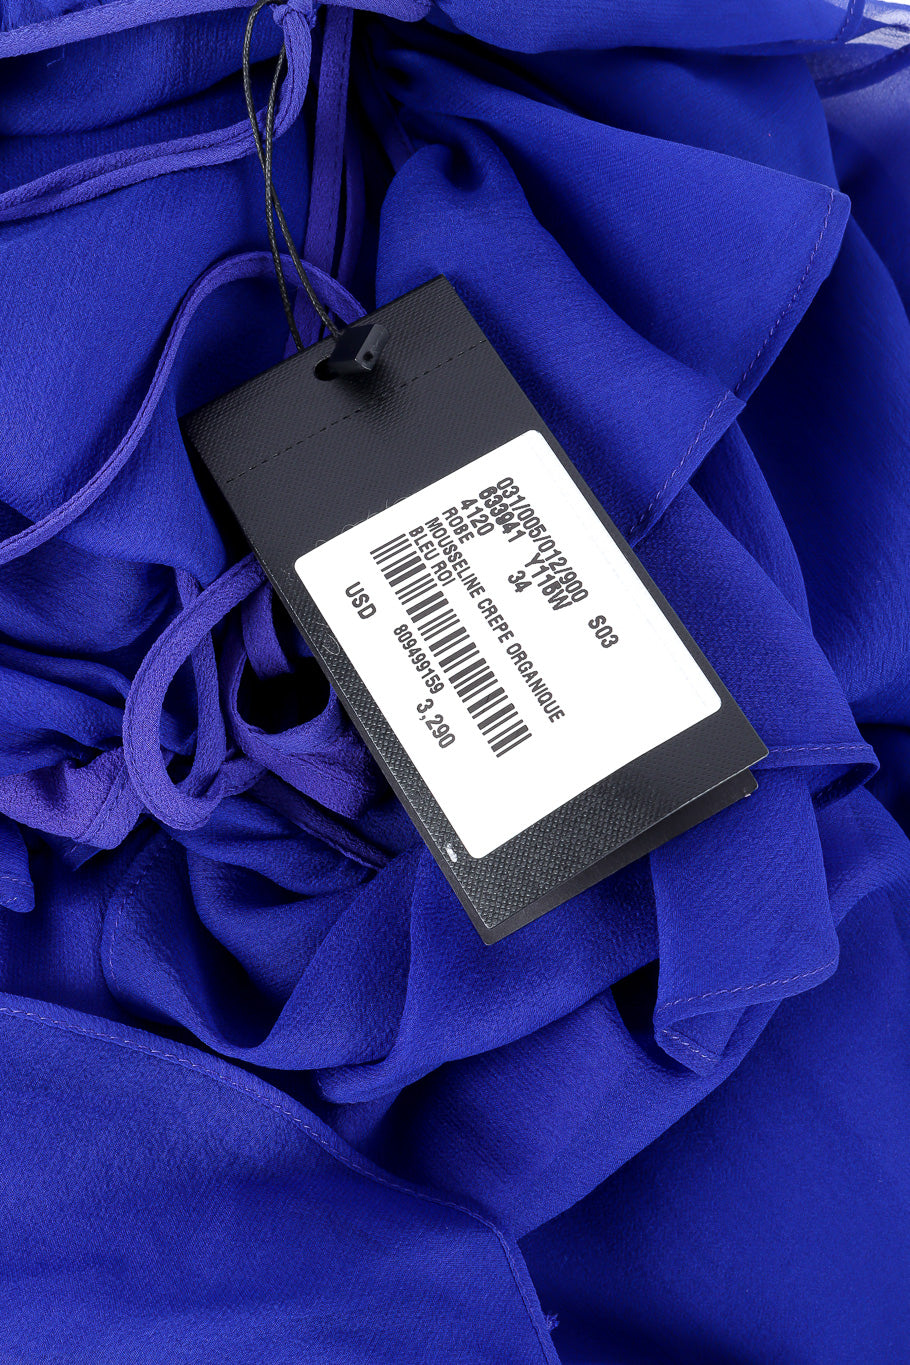 Saint Laurent 2020 Fall Sheer Silk Ruffle Dress tag details closeup @Recessla